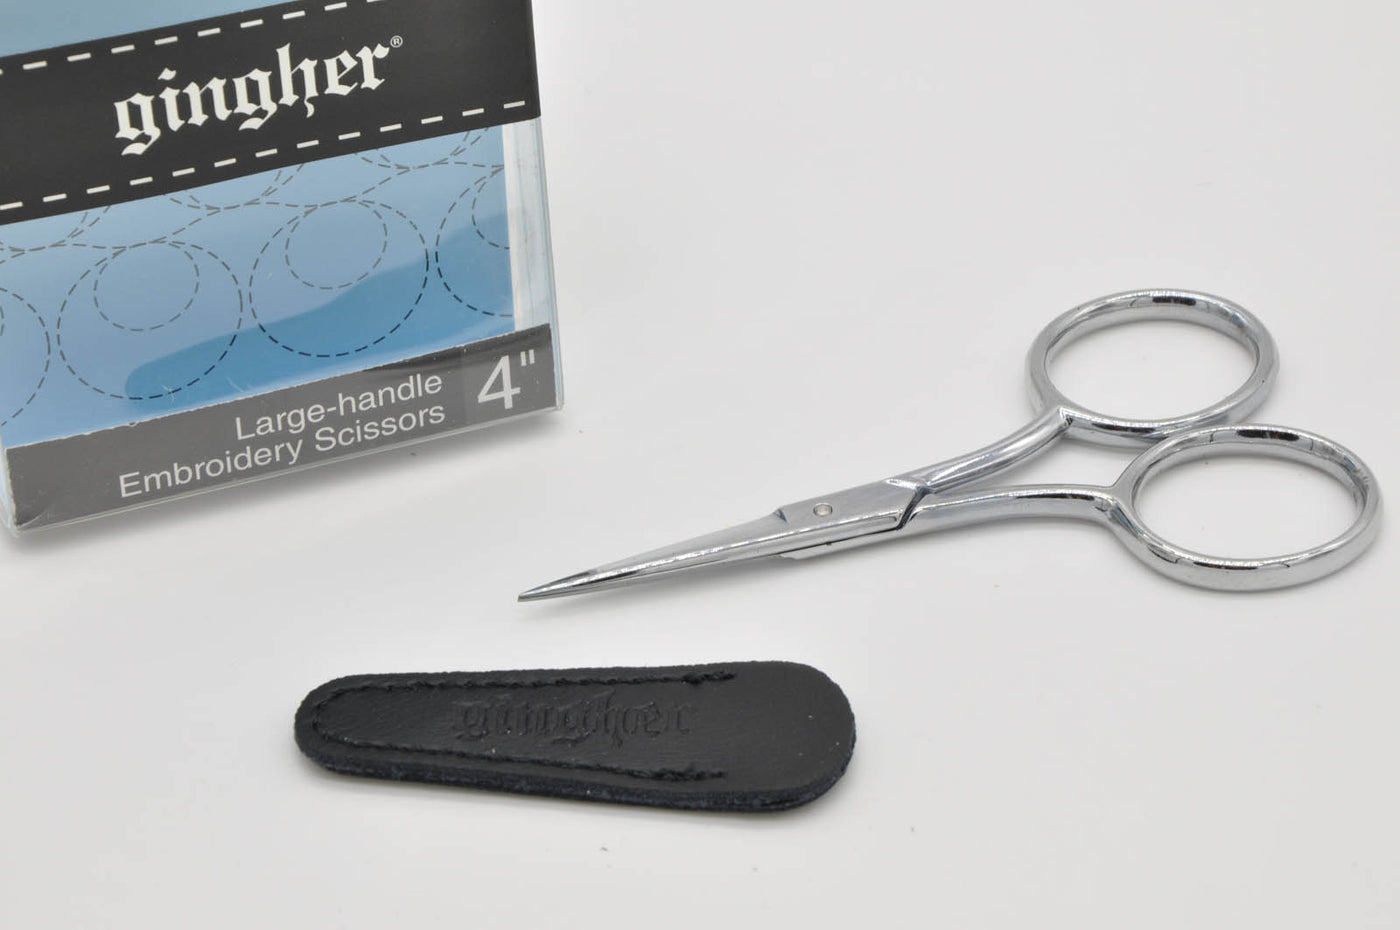 Gingher 4 Classic Embroidery Scissors (scissor 21)